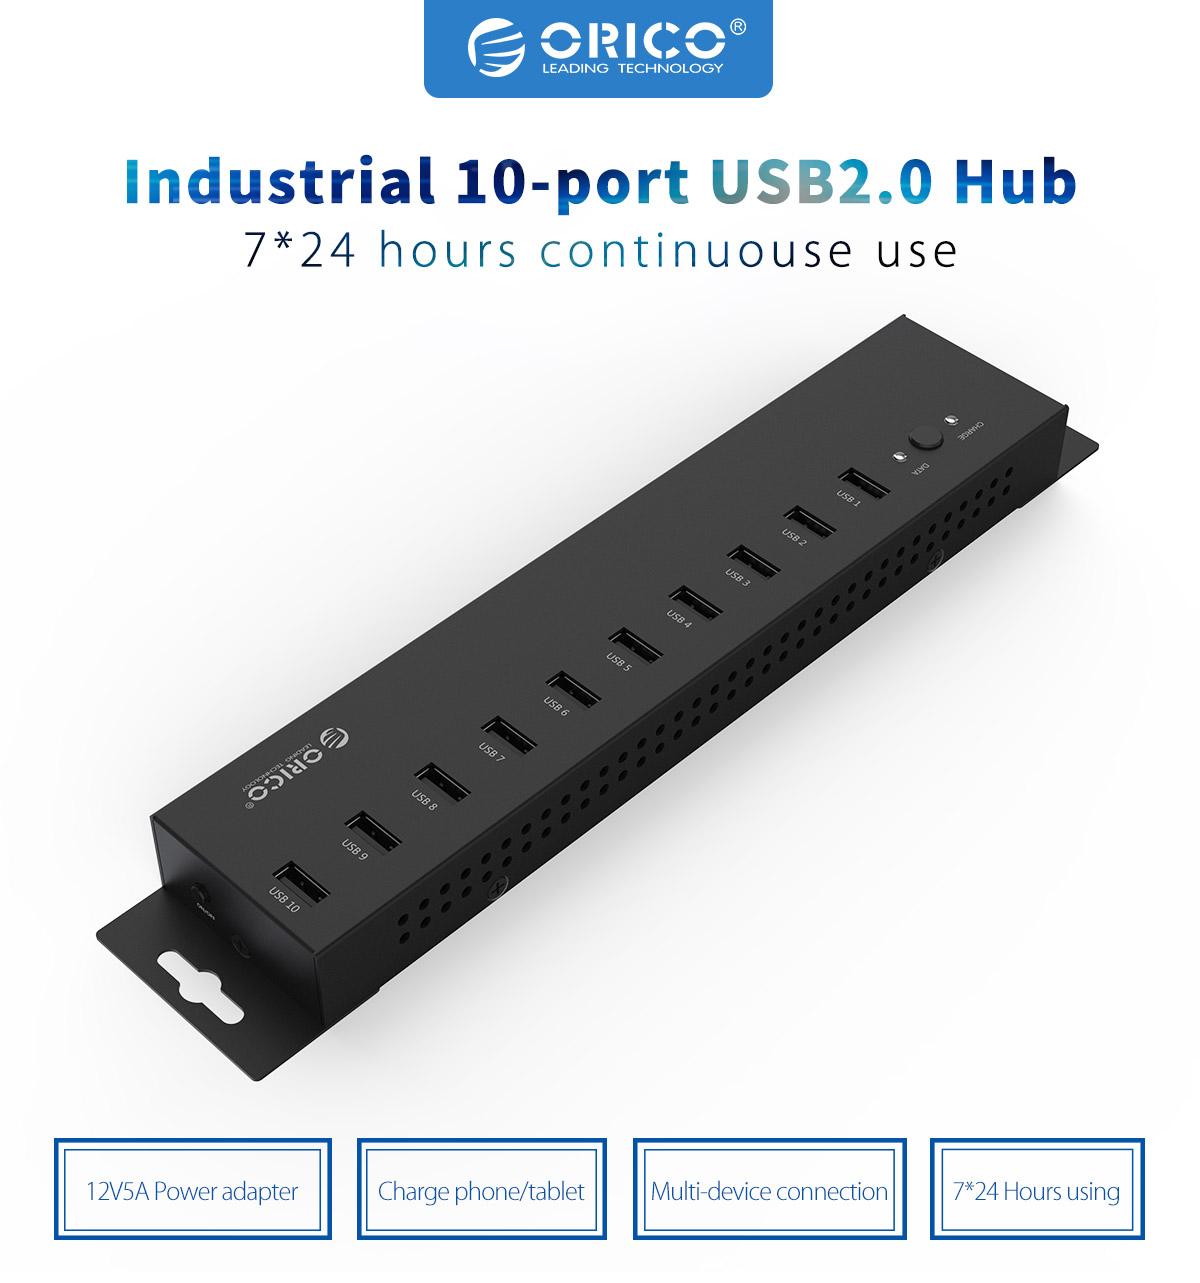 ORICO Industrial 10 Ports USB2.0 Hub